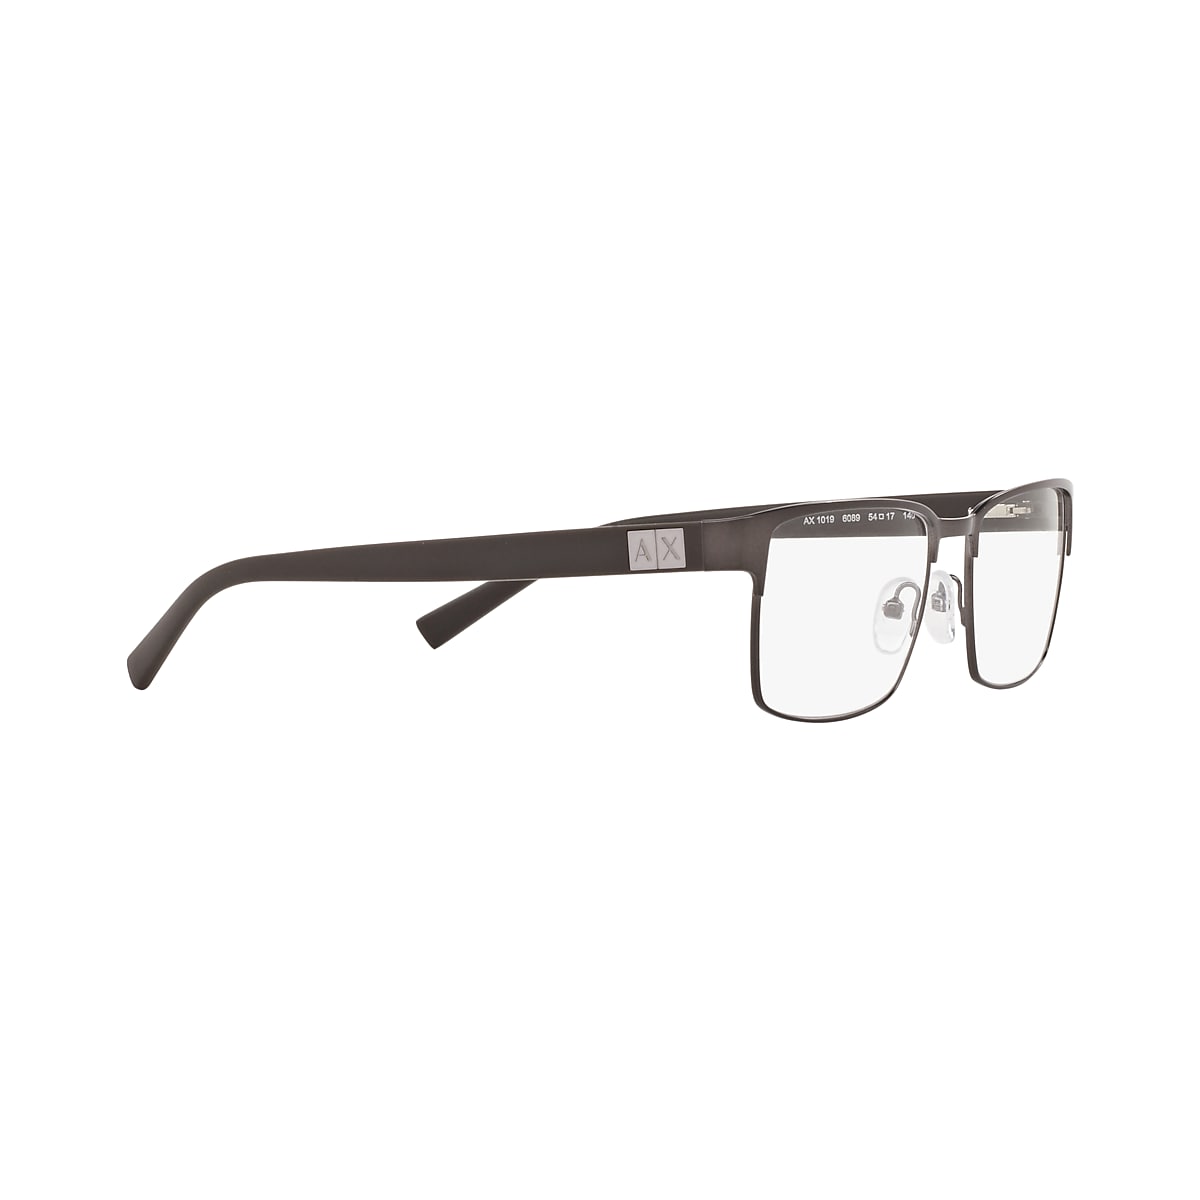 Armani Exchange 0AX1019 Glasses in Silver/gunmetal/grey | Target Optical